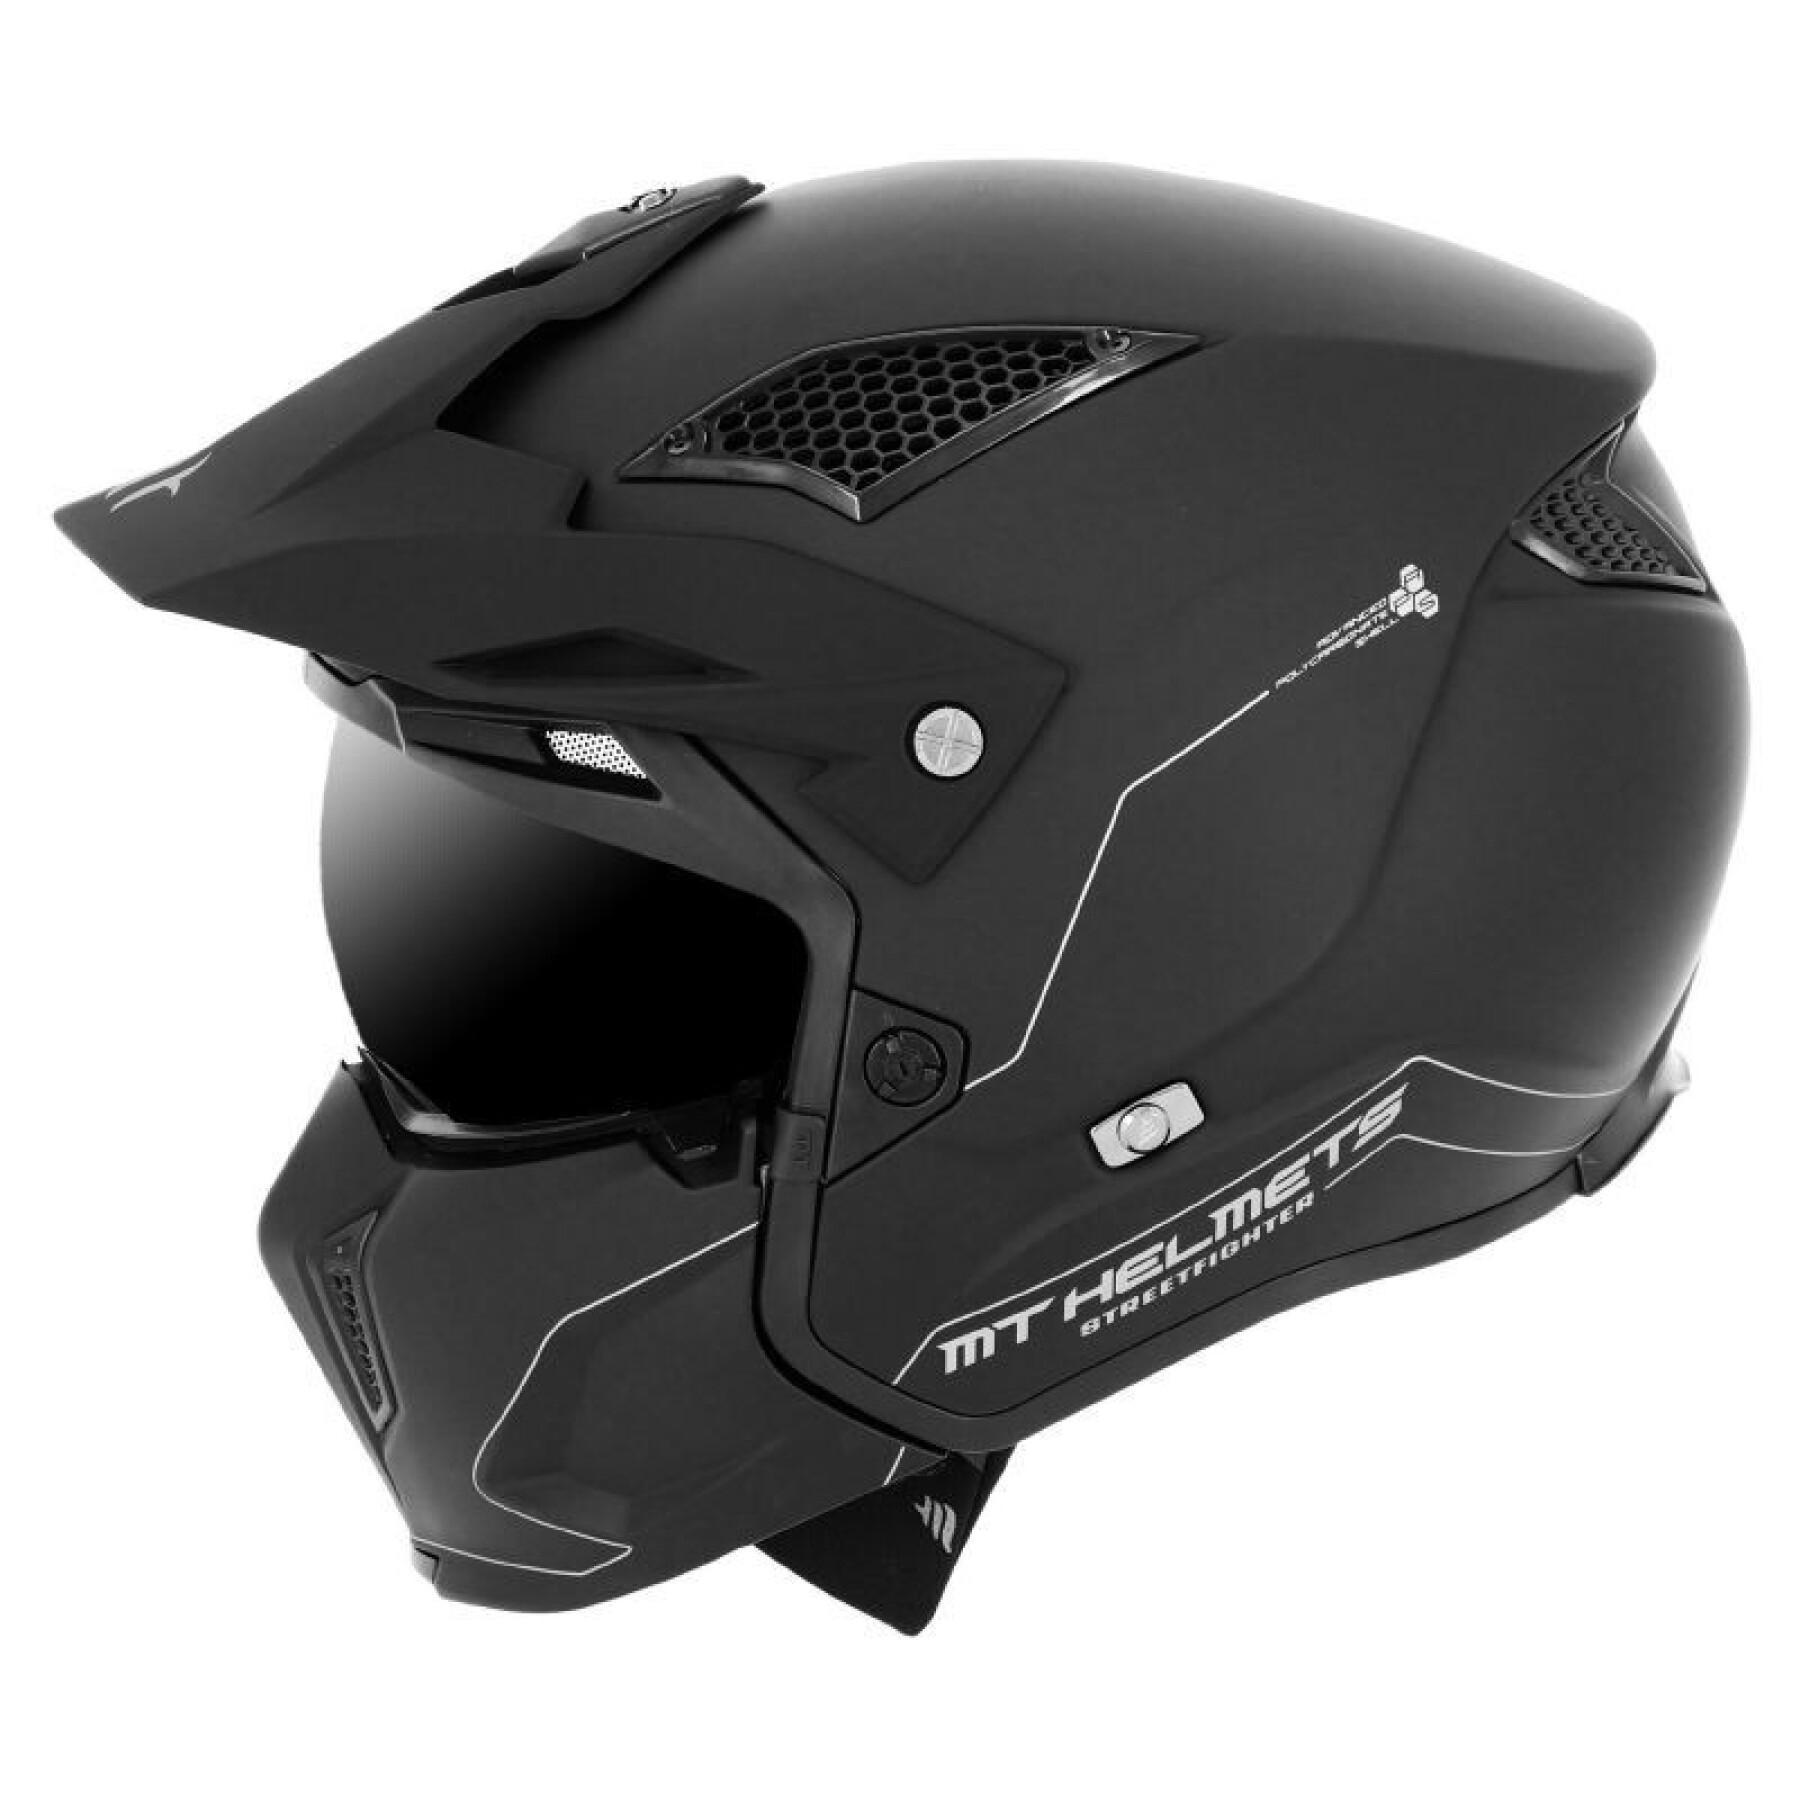 Casque intégral simple ecran transformable avec mentonniere amovible MT Helmets Trial Streetfighter SV